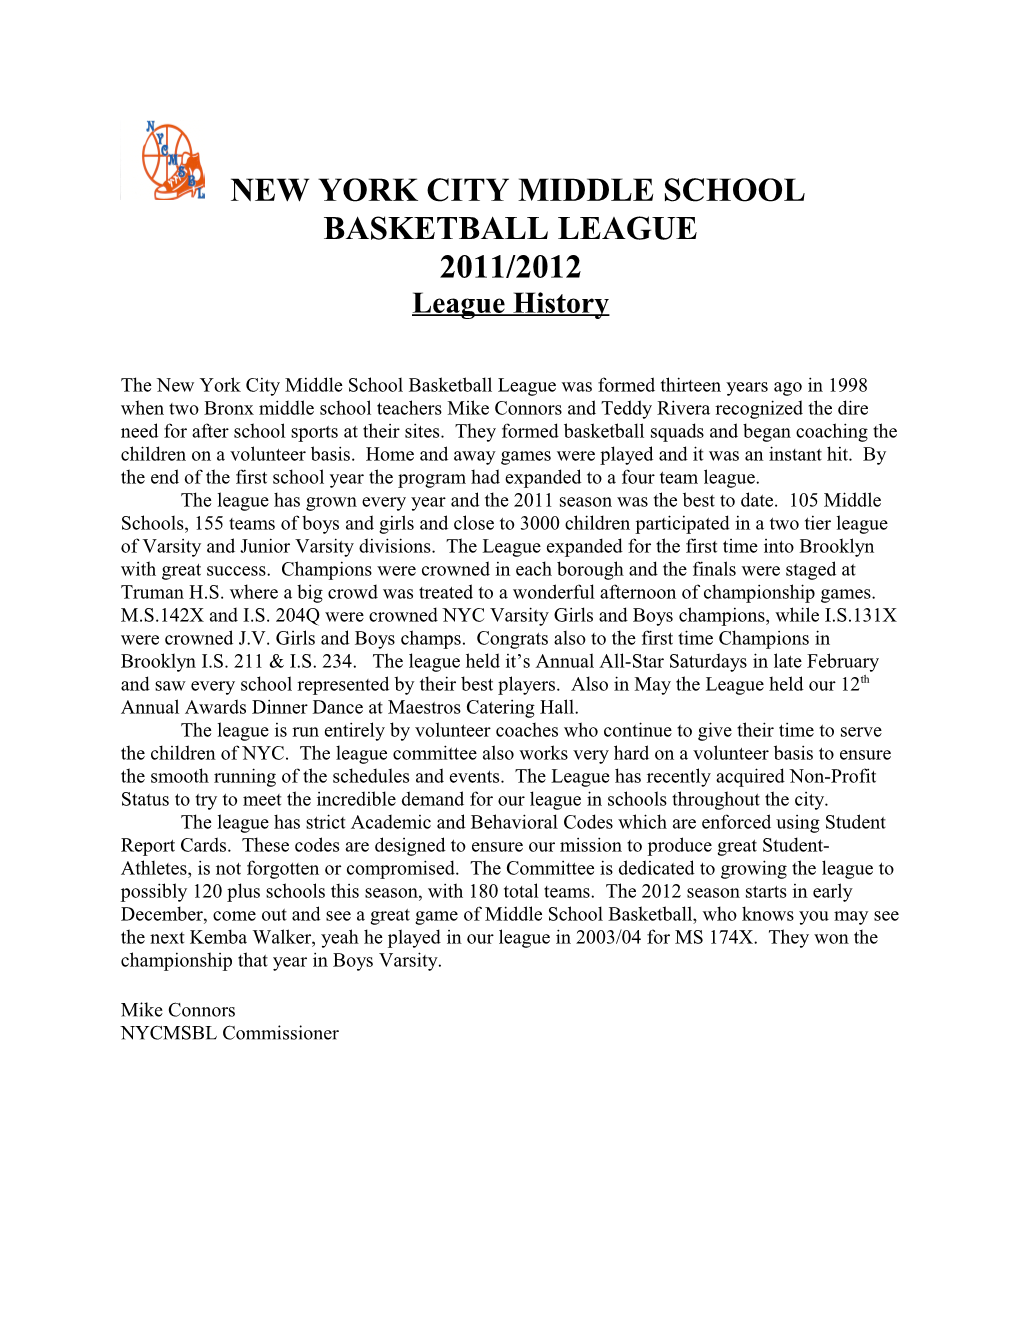 New York City Middle School